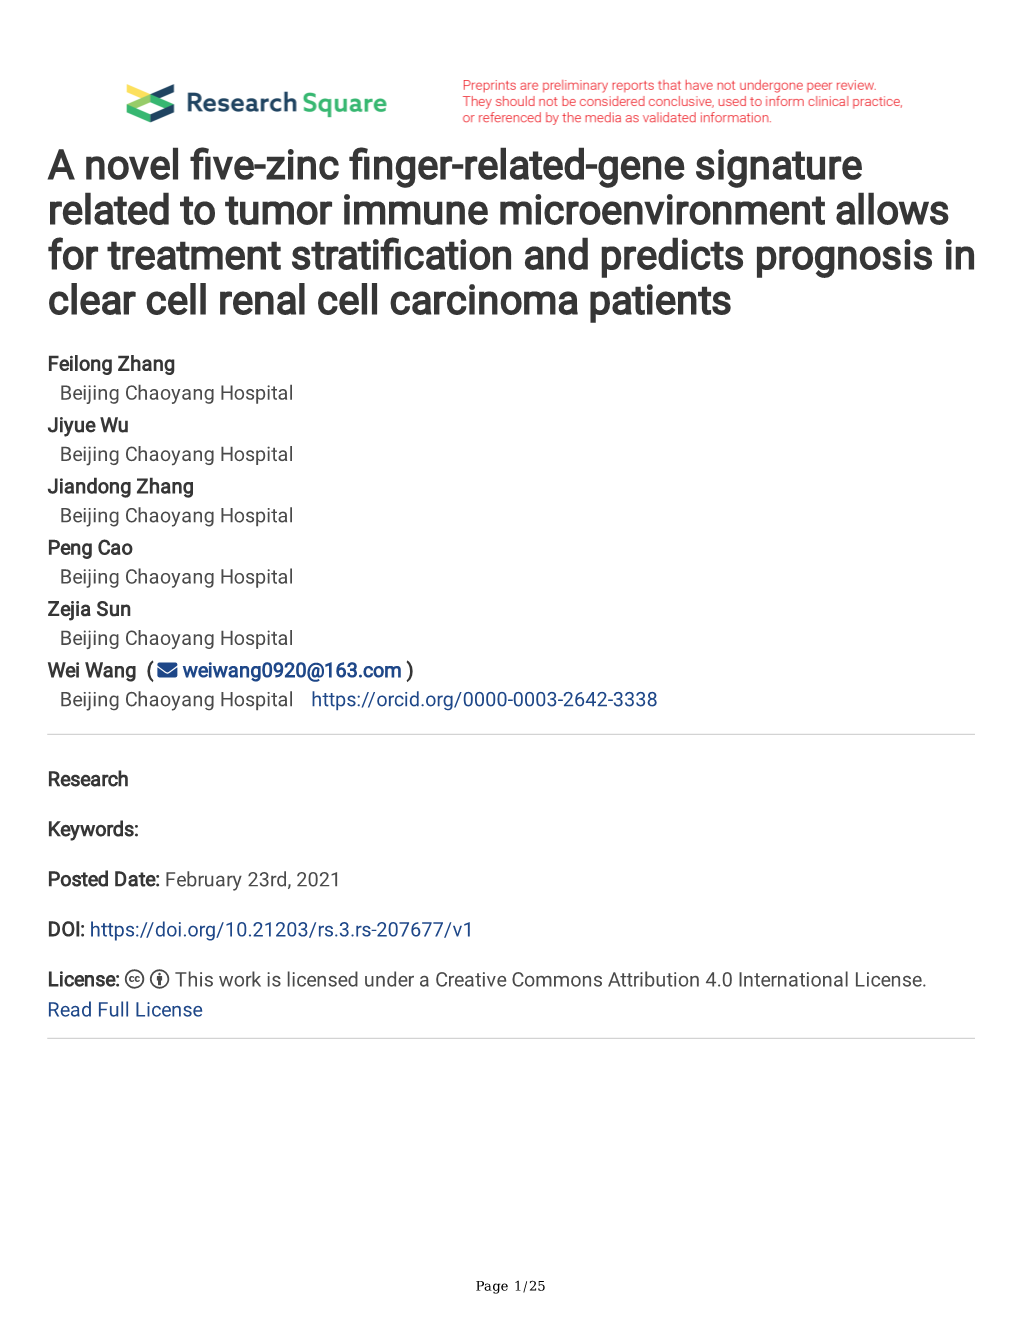 A Novel Ve-Zinc Nger-Related-Gene Signature Related to Tumor Immune